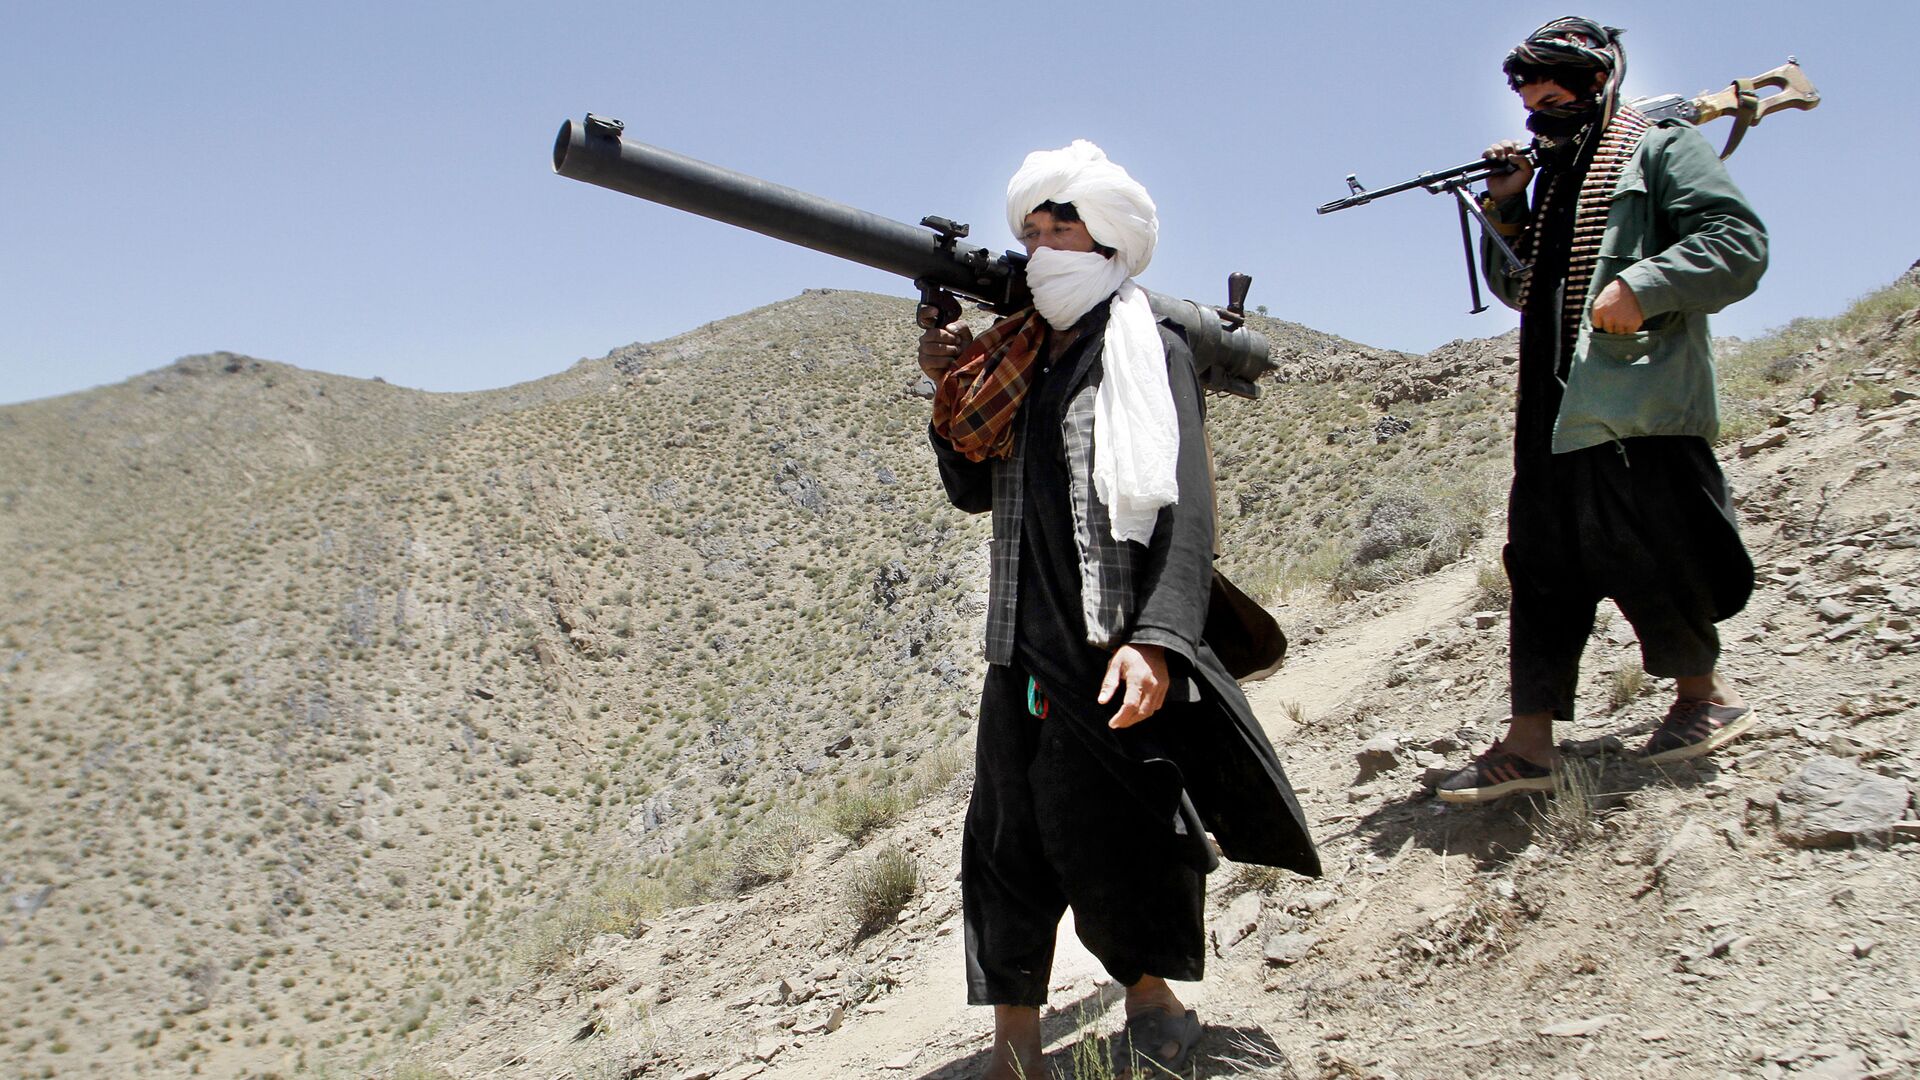 Члены террористического движения Талибан в Афганистане - Sputnik Таджикистан, 1920, 16.04.2021